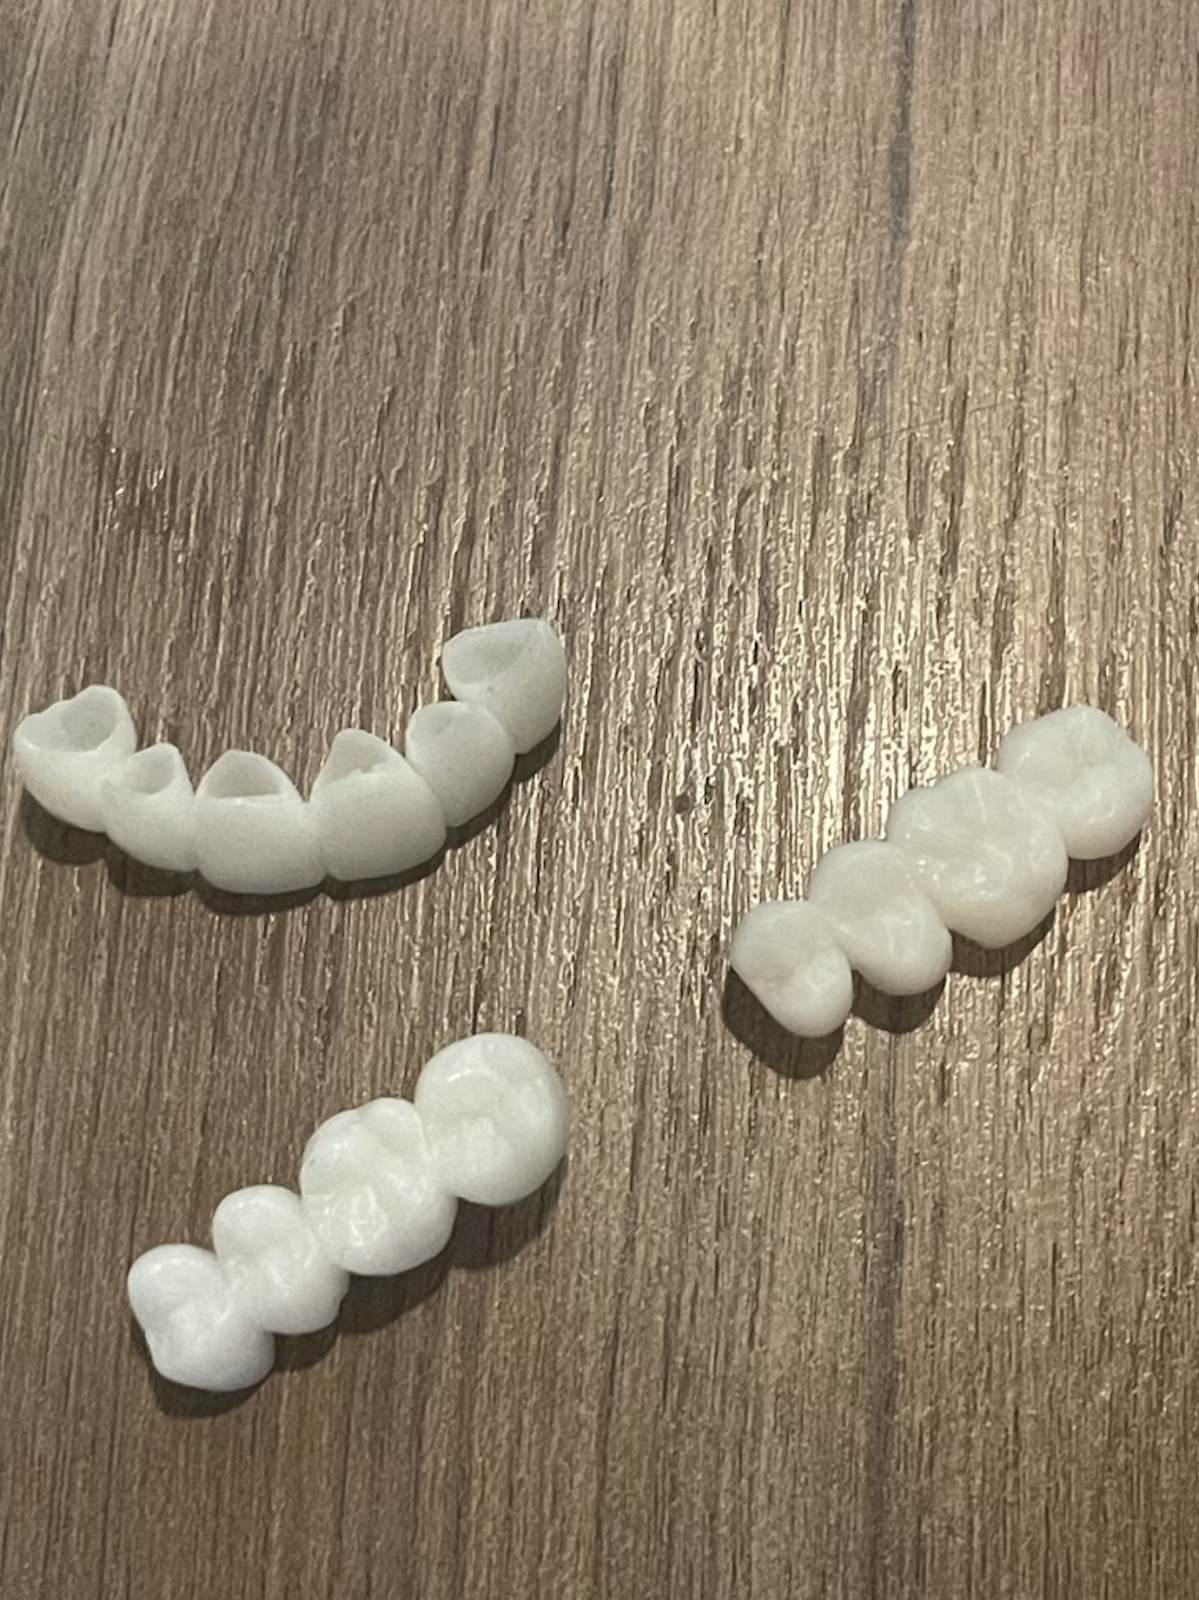 Temporary teeth